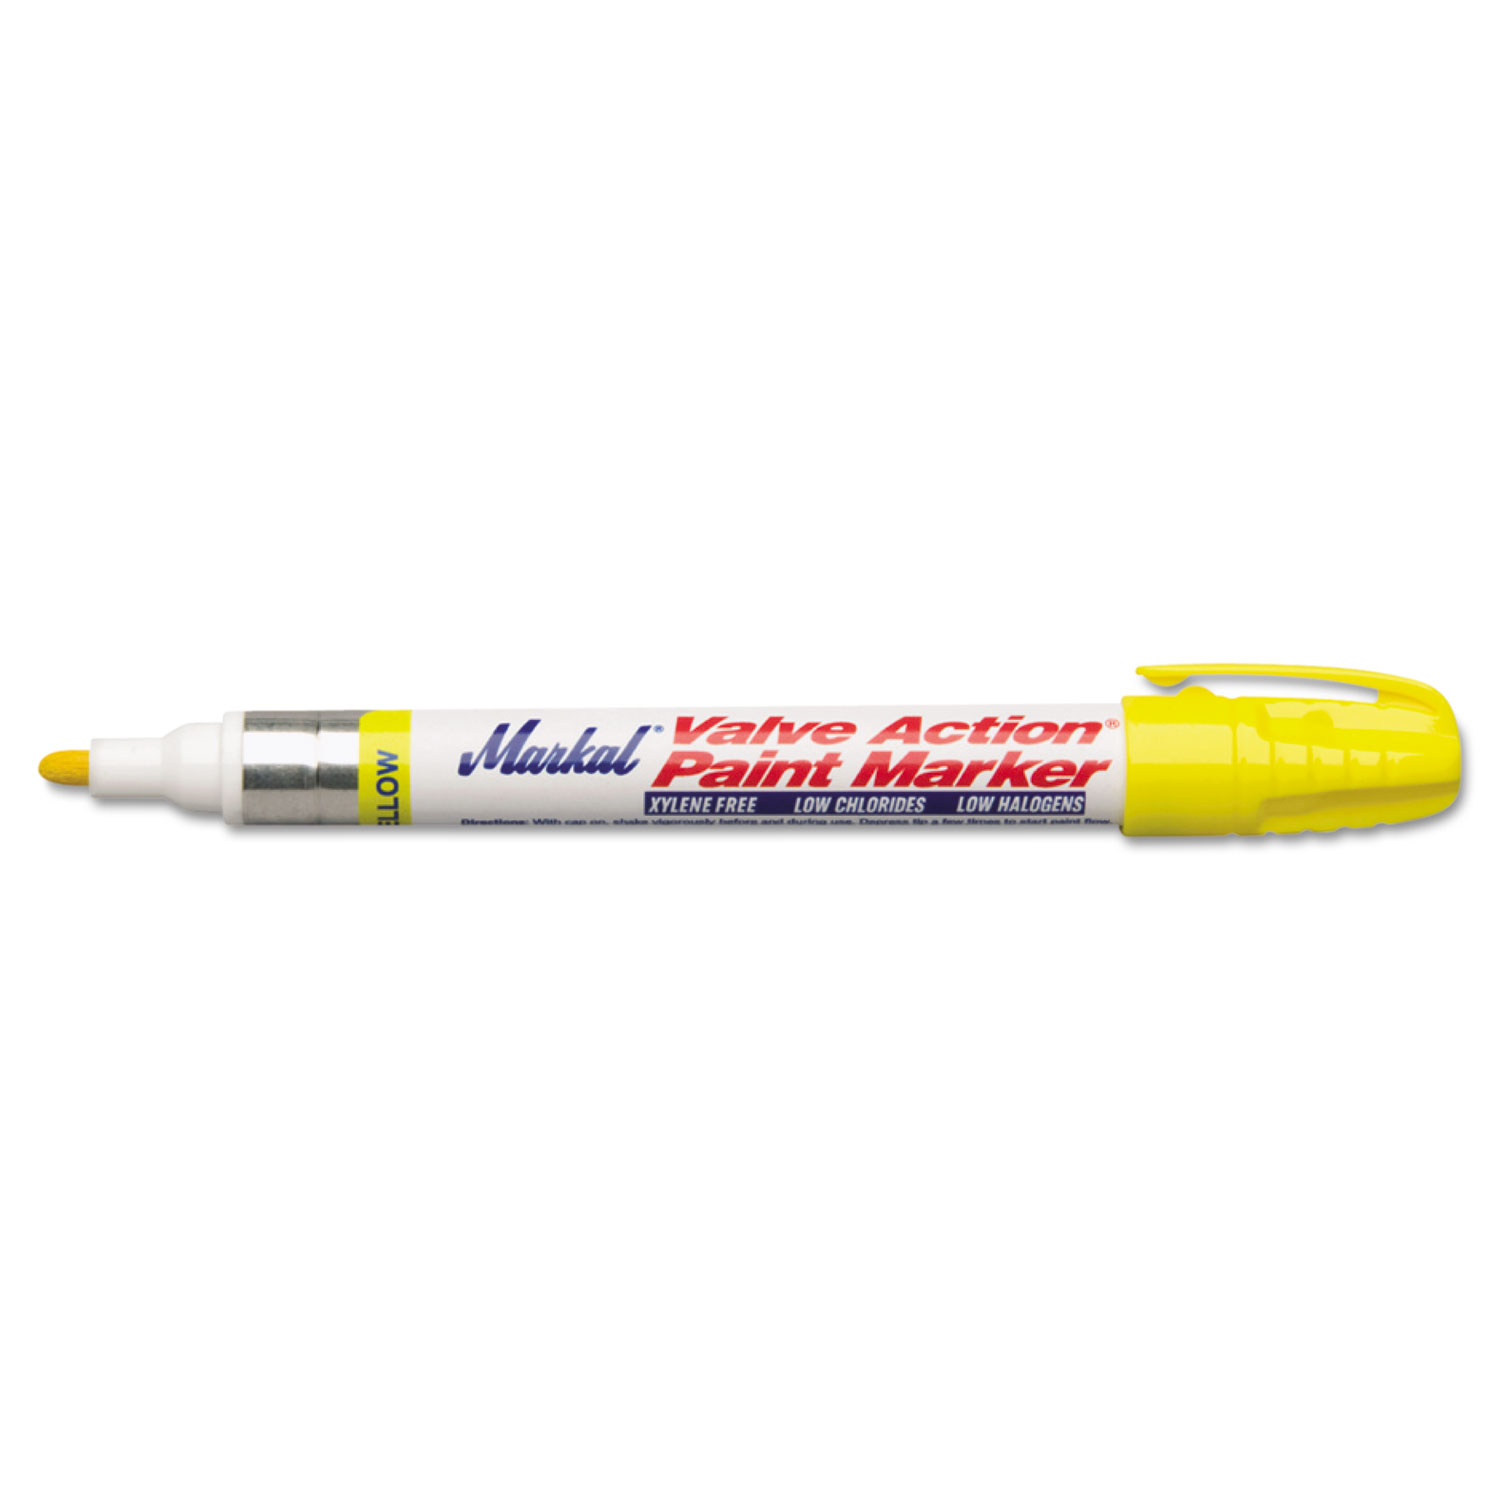  Markal 96821 Valve Action Paint Marker 96821, Medium Bullet Tip, Yellow (MRK96821) 